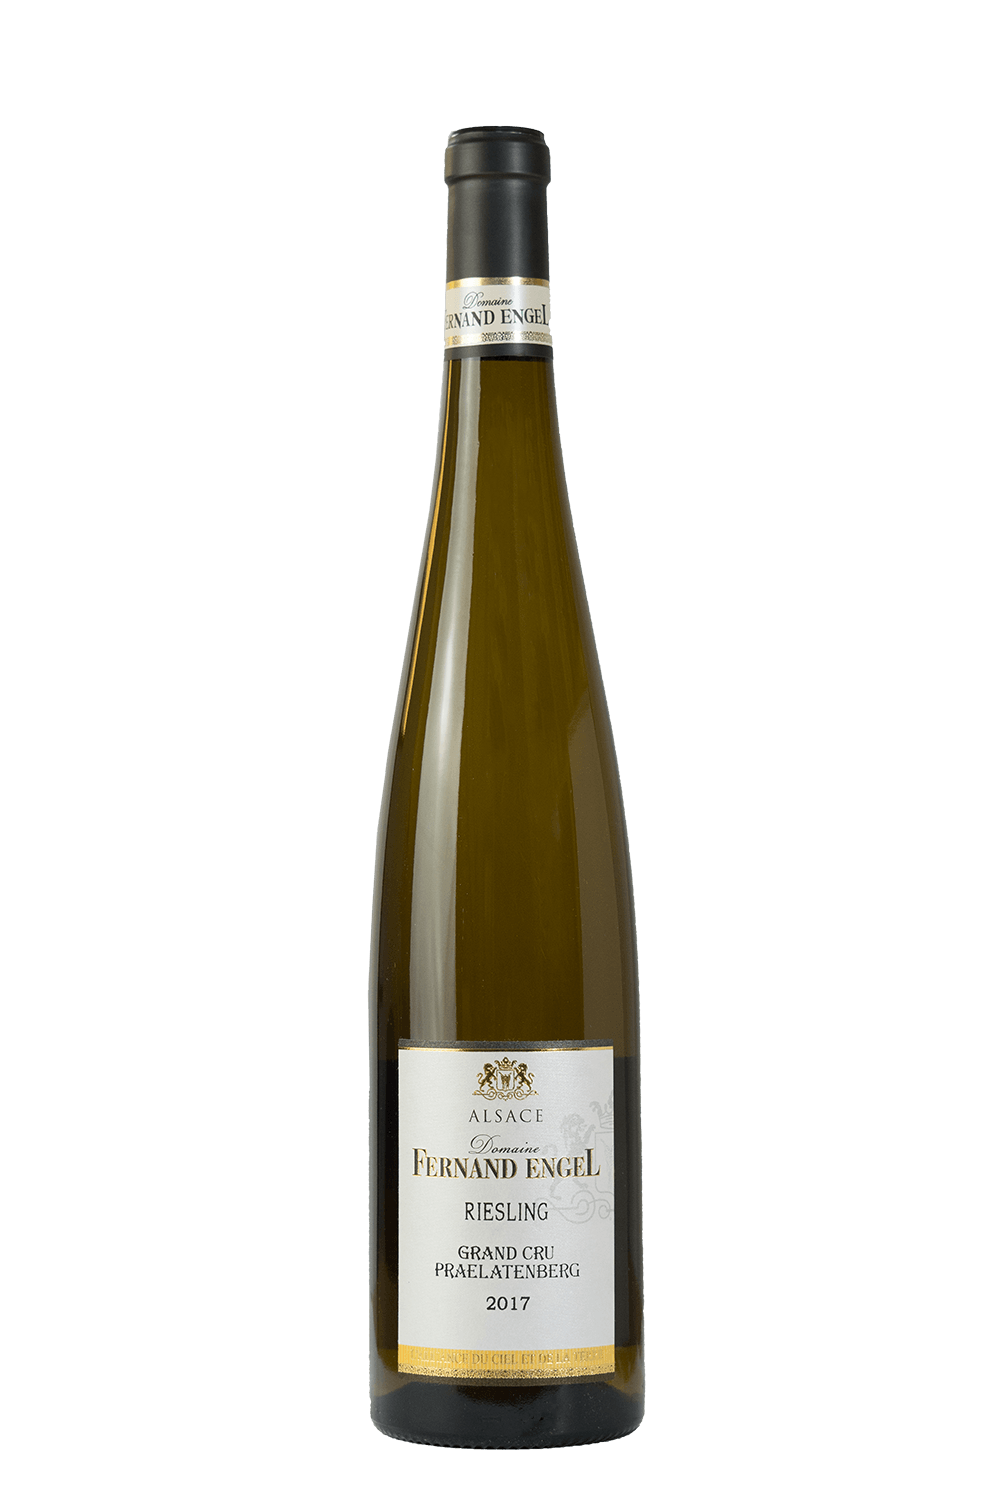 Fernand Engel Grand Cru Praelatenberg 2017 - The Blend Wines